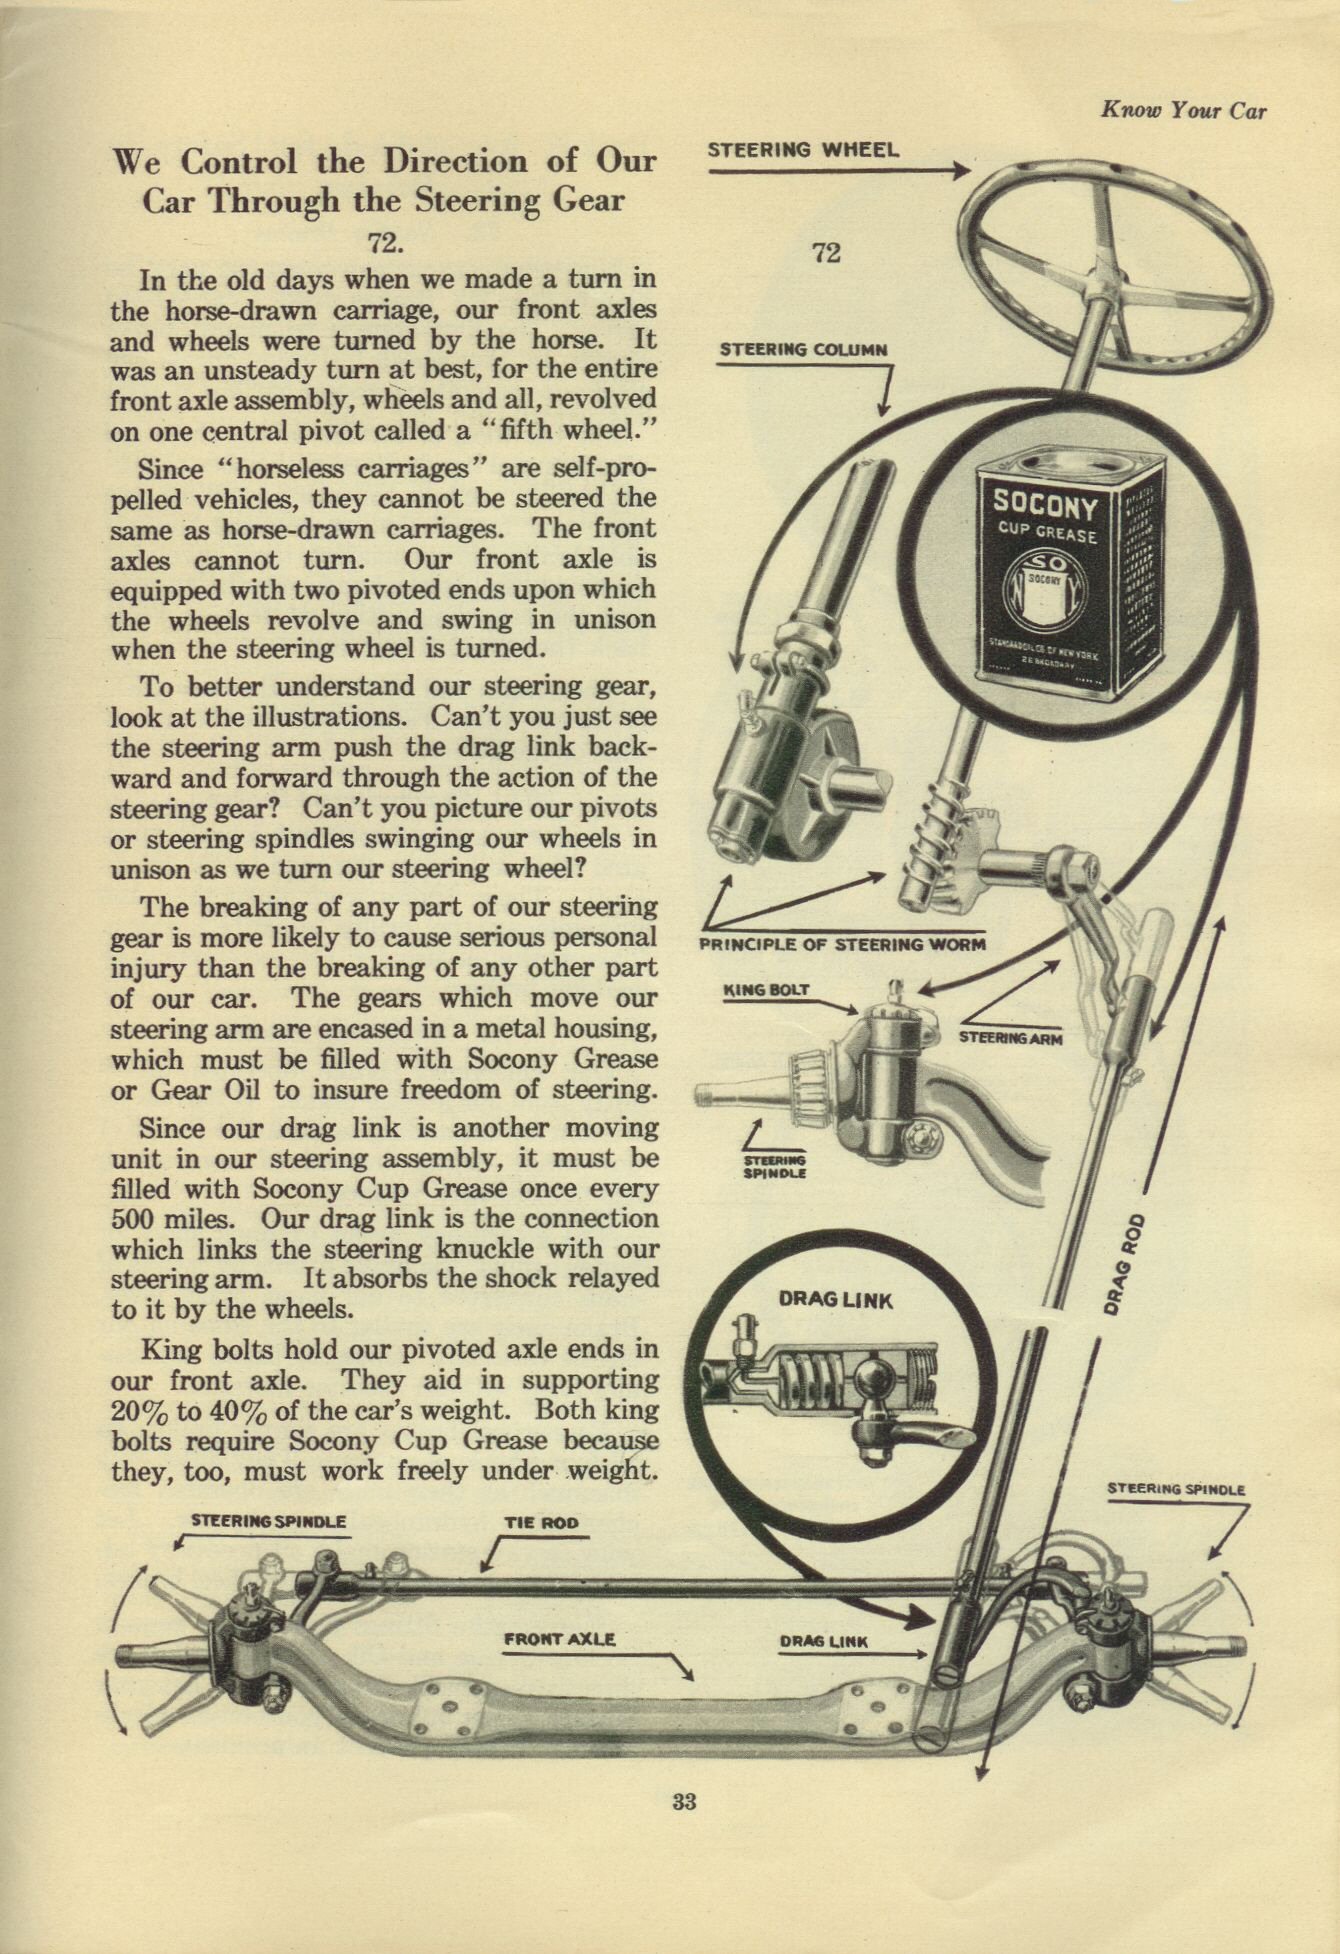 1928 Know Your Car Handbook Page 9